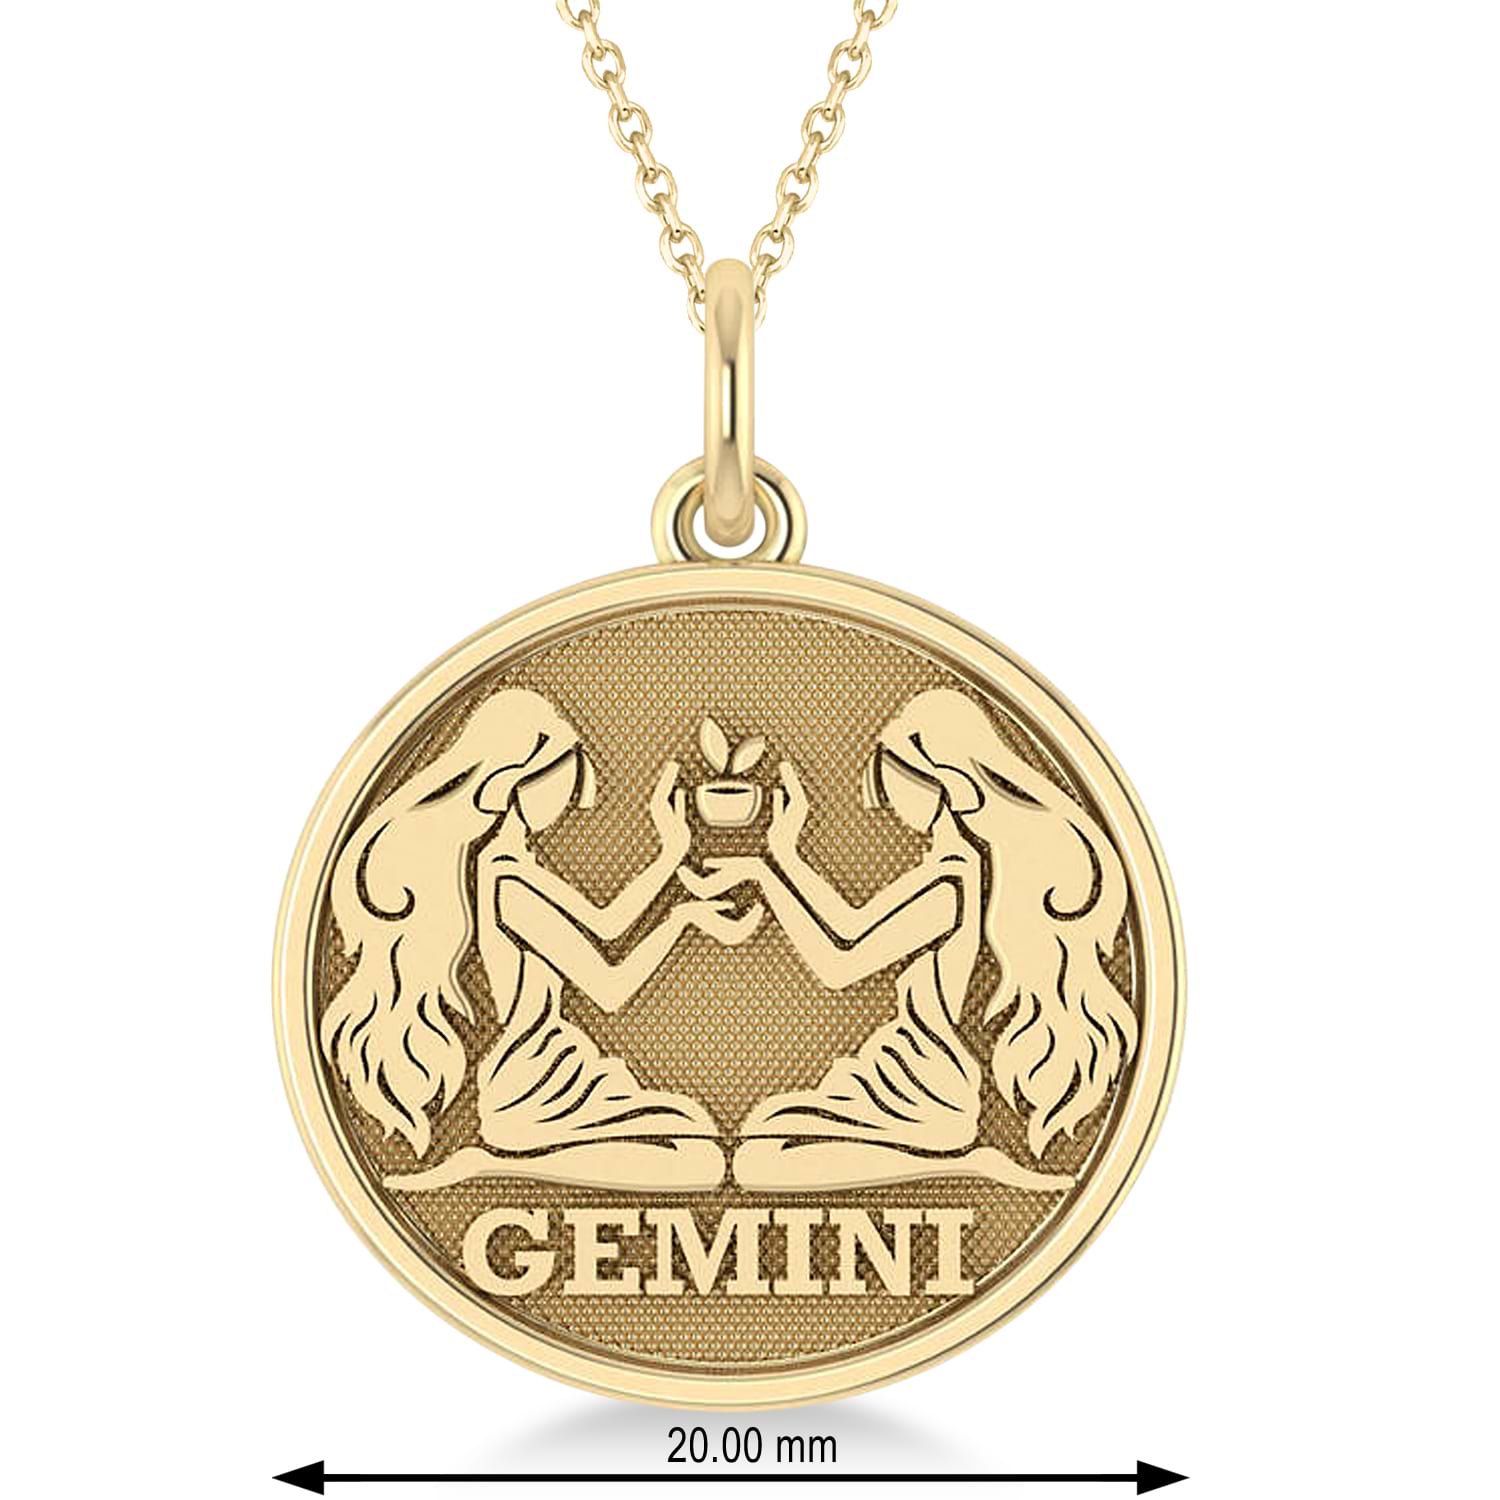 Gemini Coin Zodiac Pendant Necklace 14k Yellow Gold